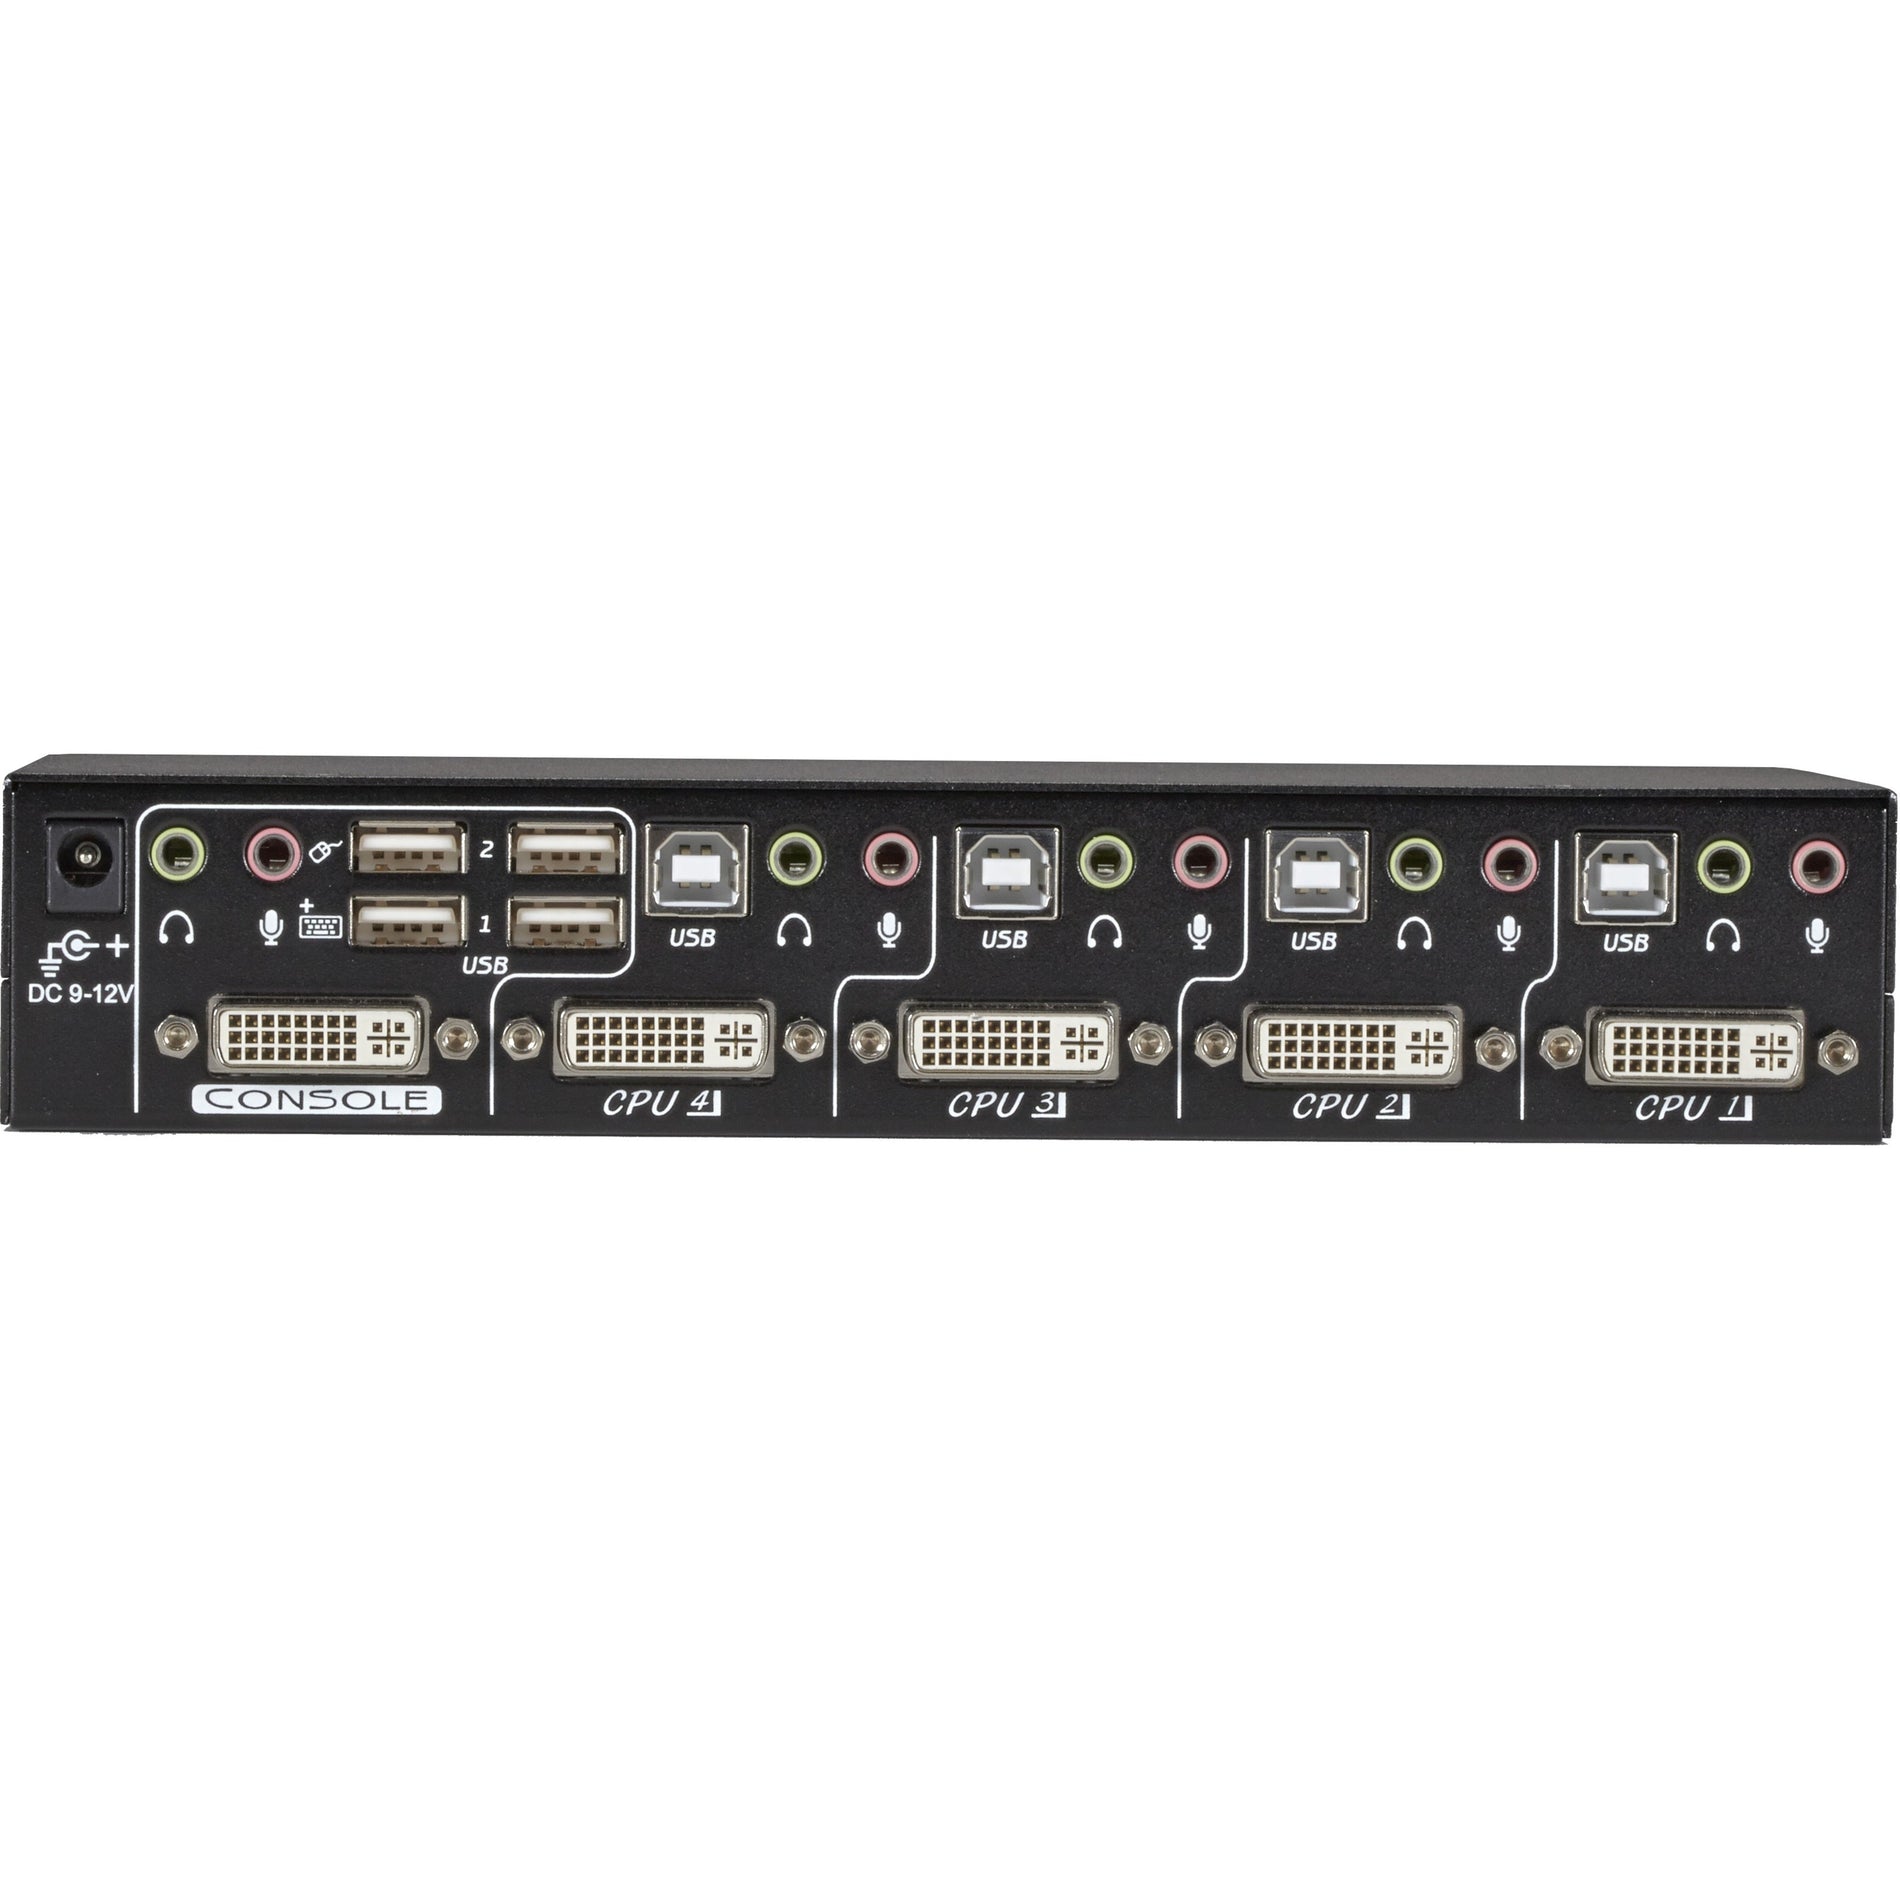 Black Box KV9614A ServSwitch DT DVI KVM Switch, 4-Port with Emulated USB Keyboard/Mouse